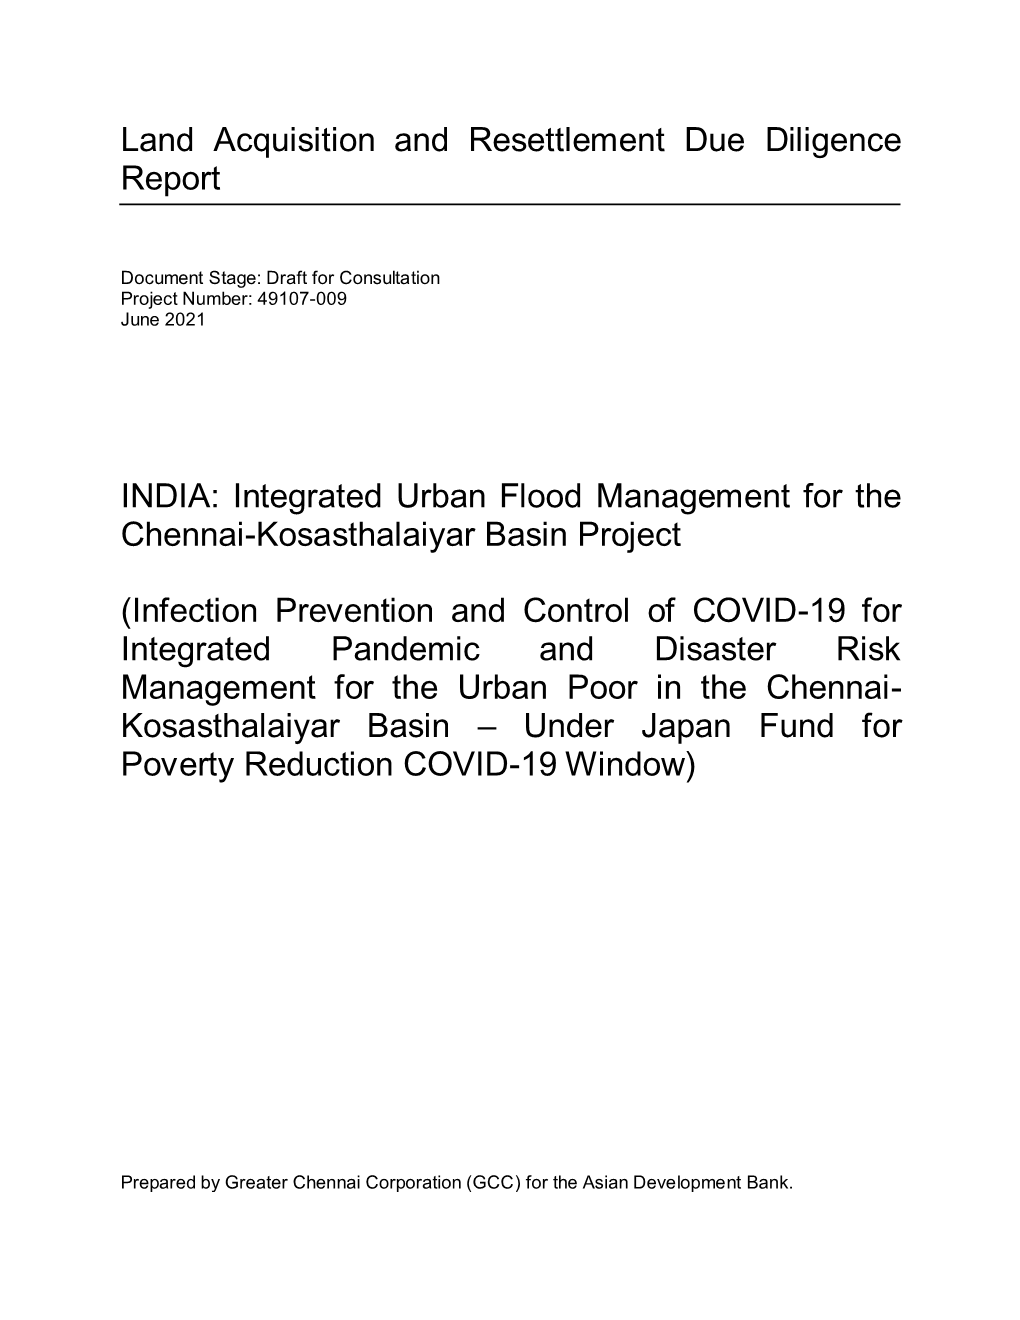 Integrated Urban Flood Management for the Chennai-Kosasthalaiyar Basin Project